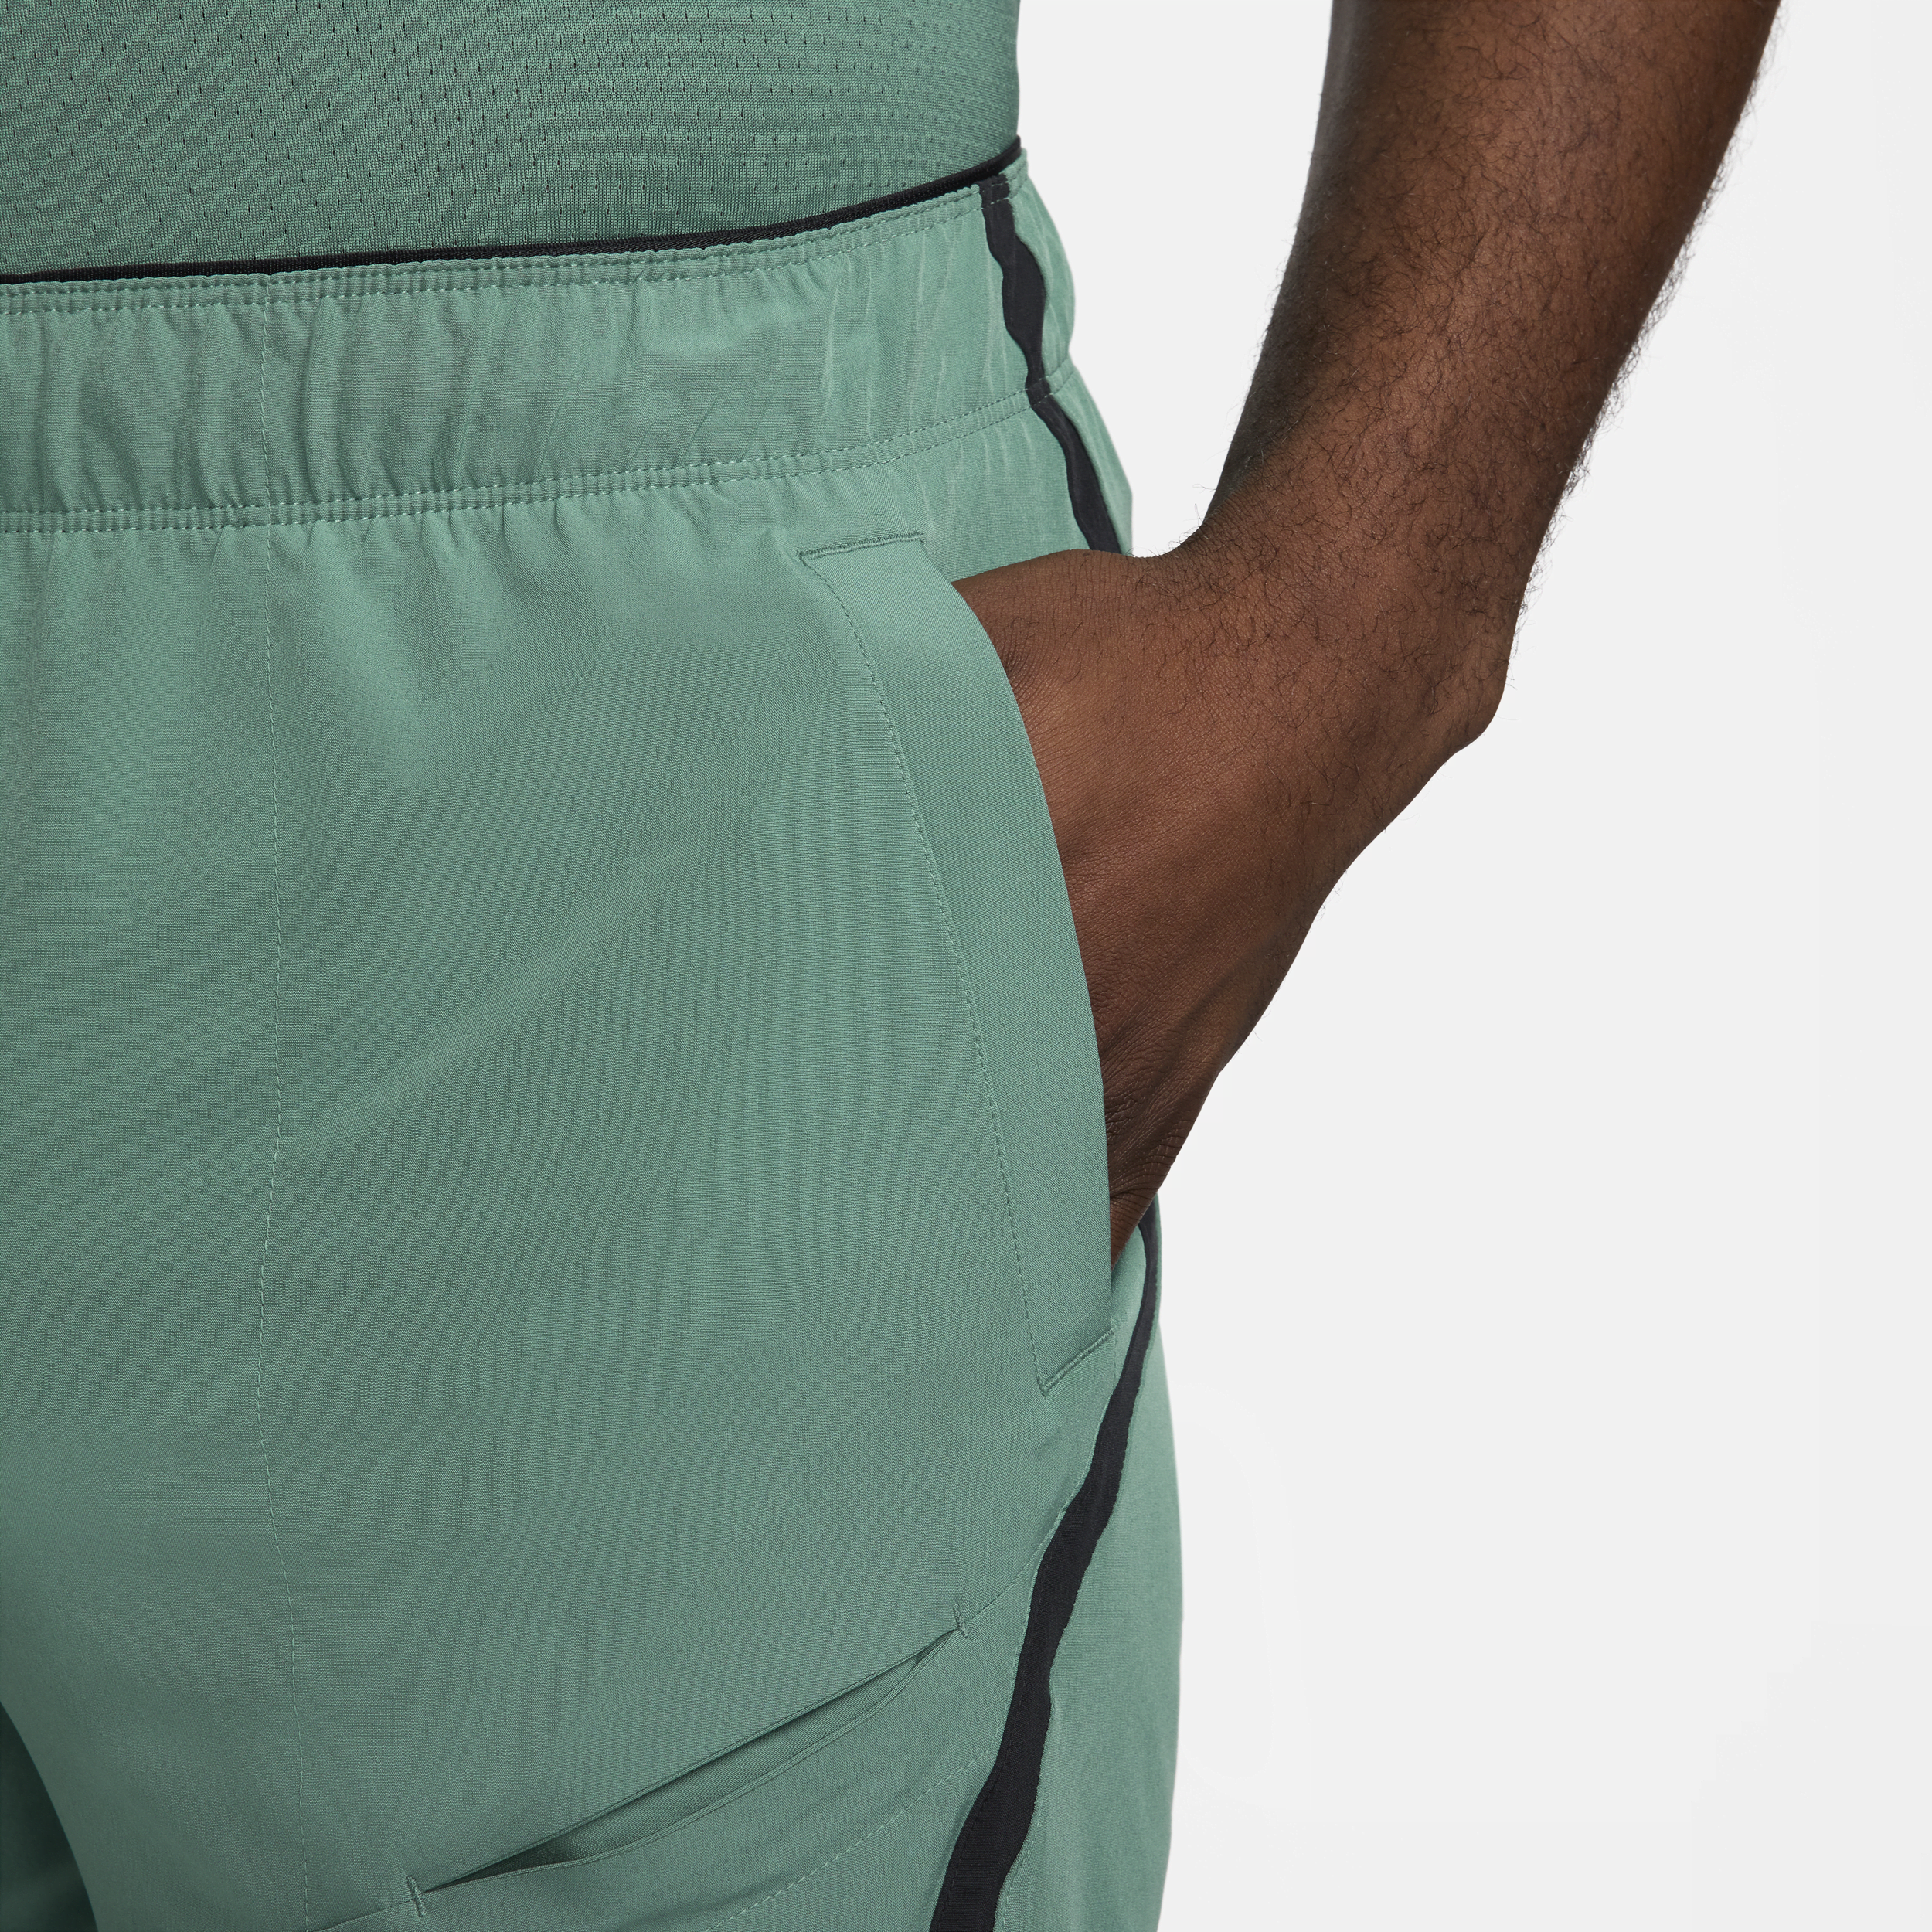 Nike Court Advantage Dri-FIT tennisshorts voor heren (18 cm) Groen